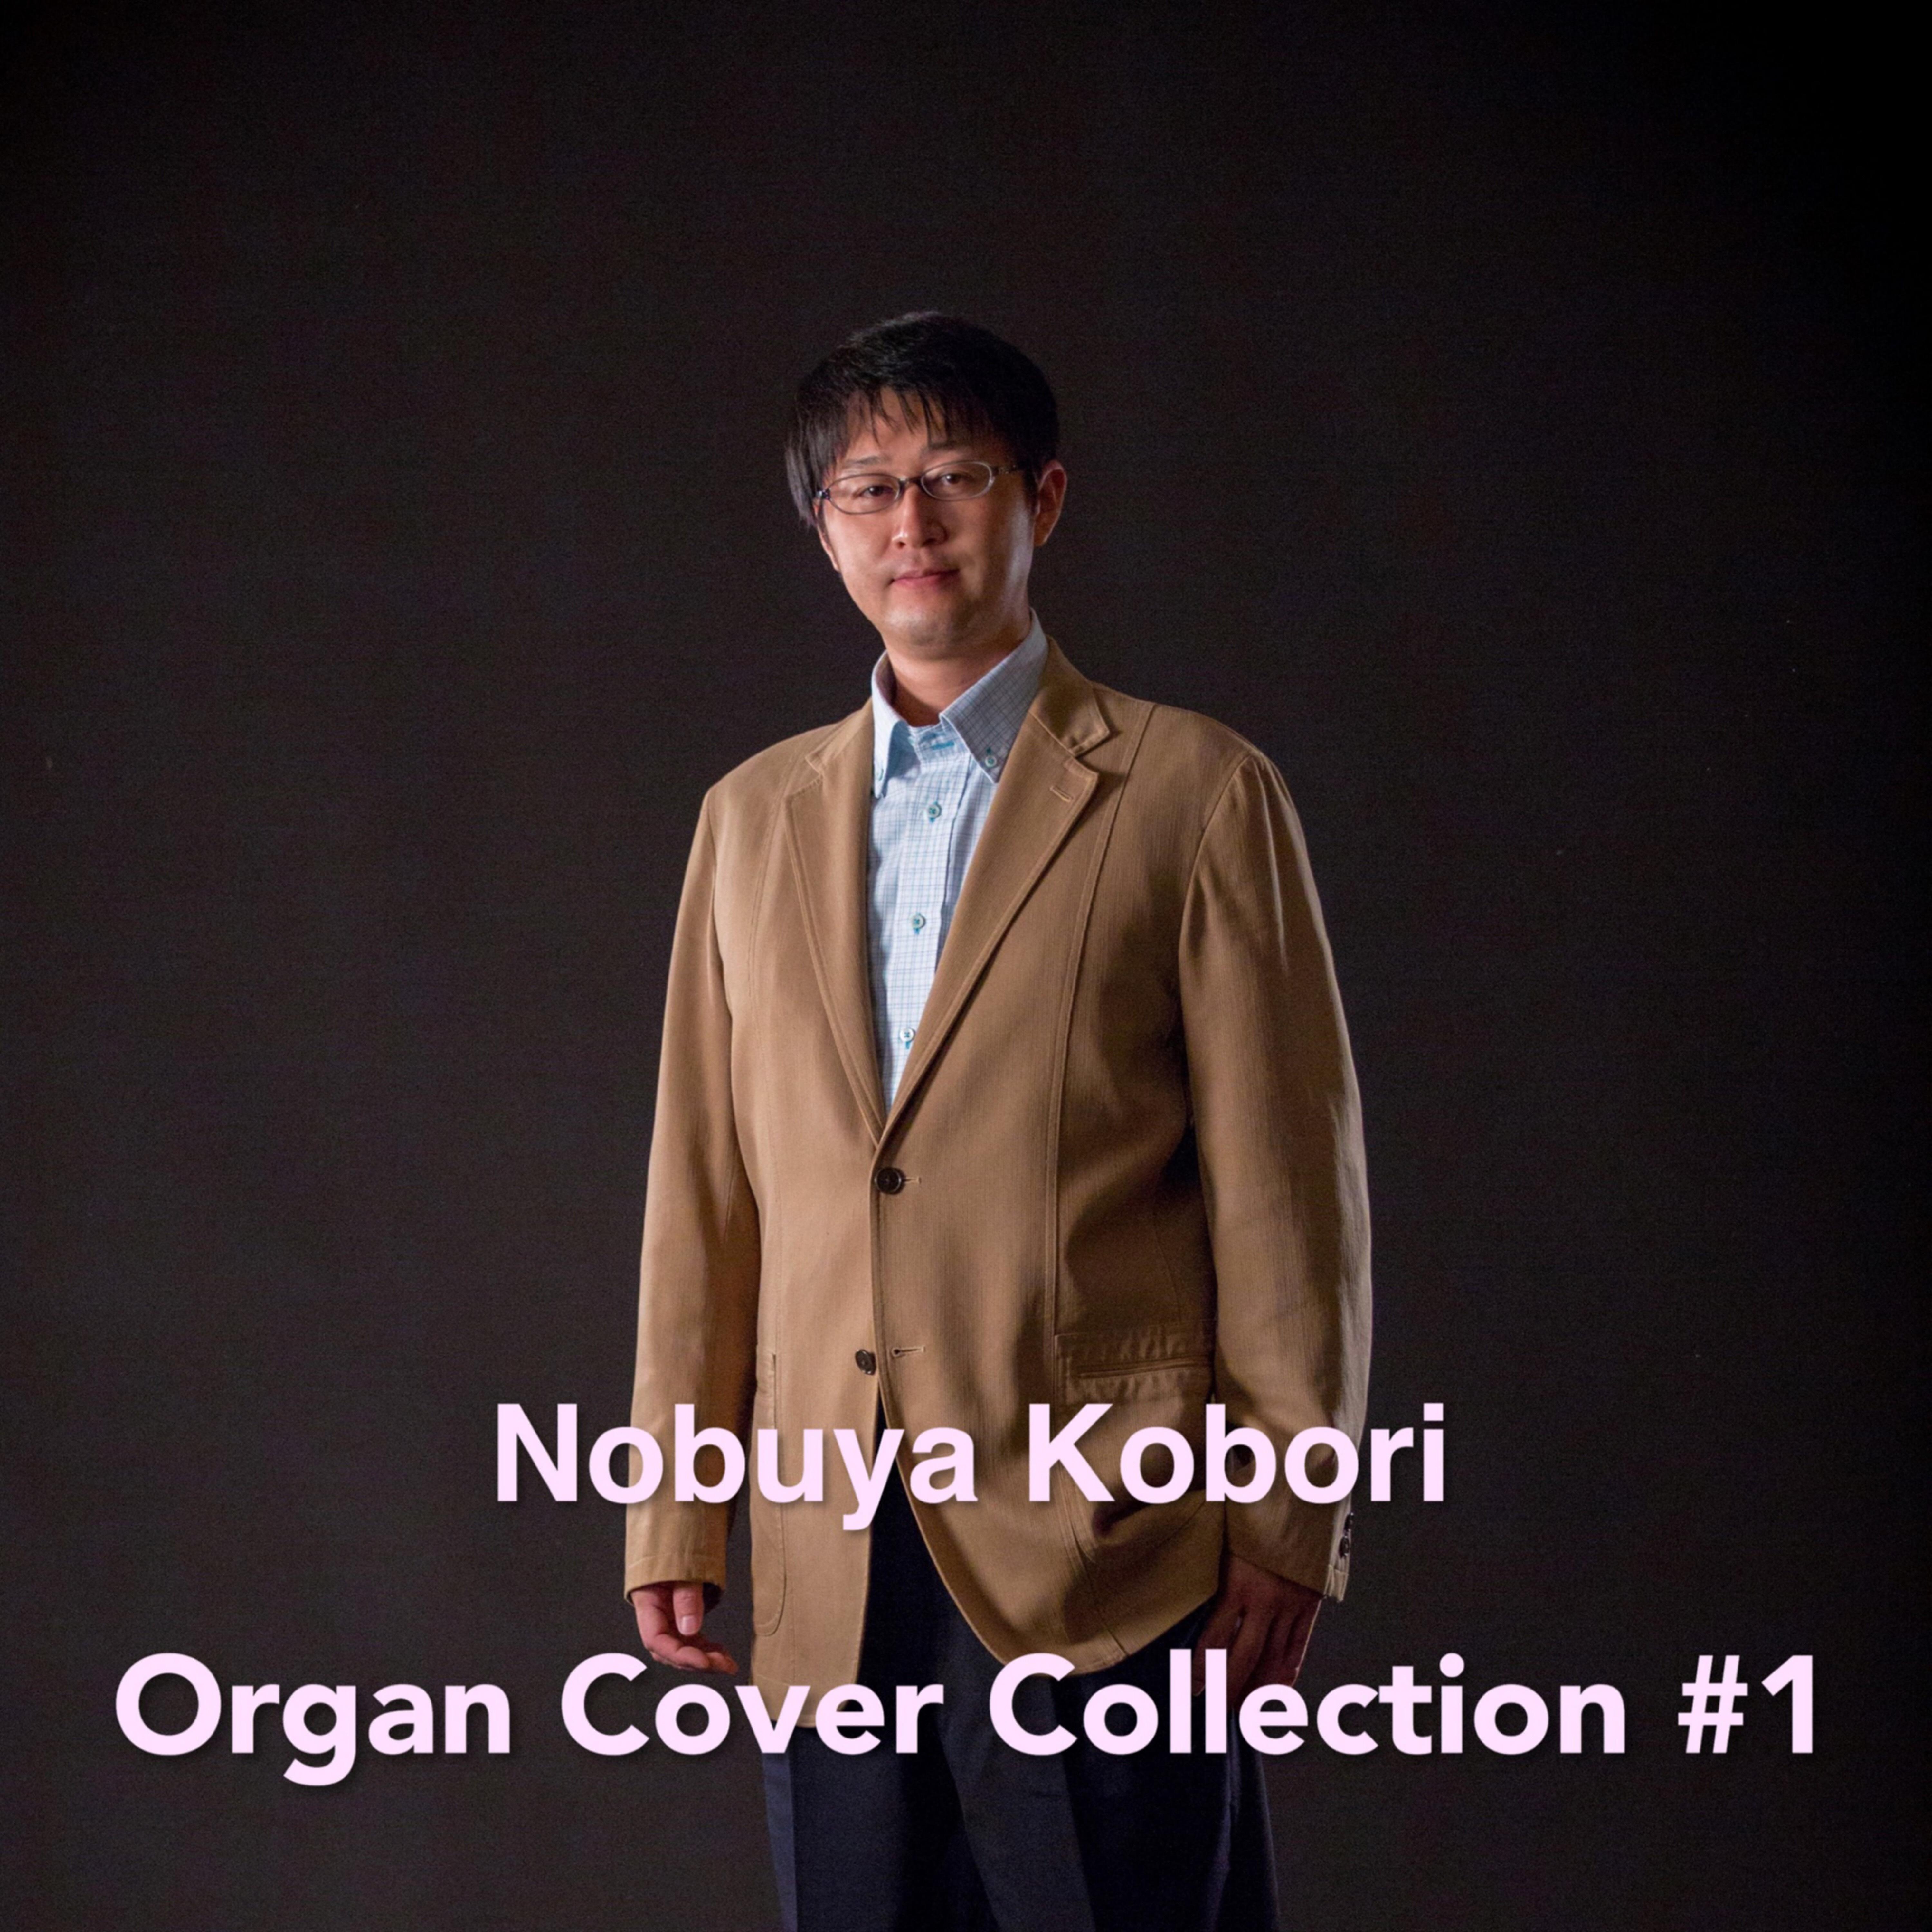 Organ Cover Collection #1